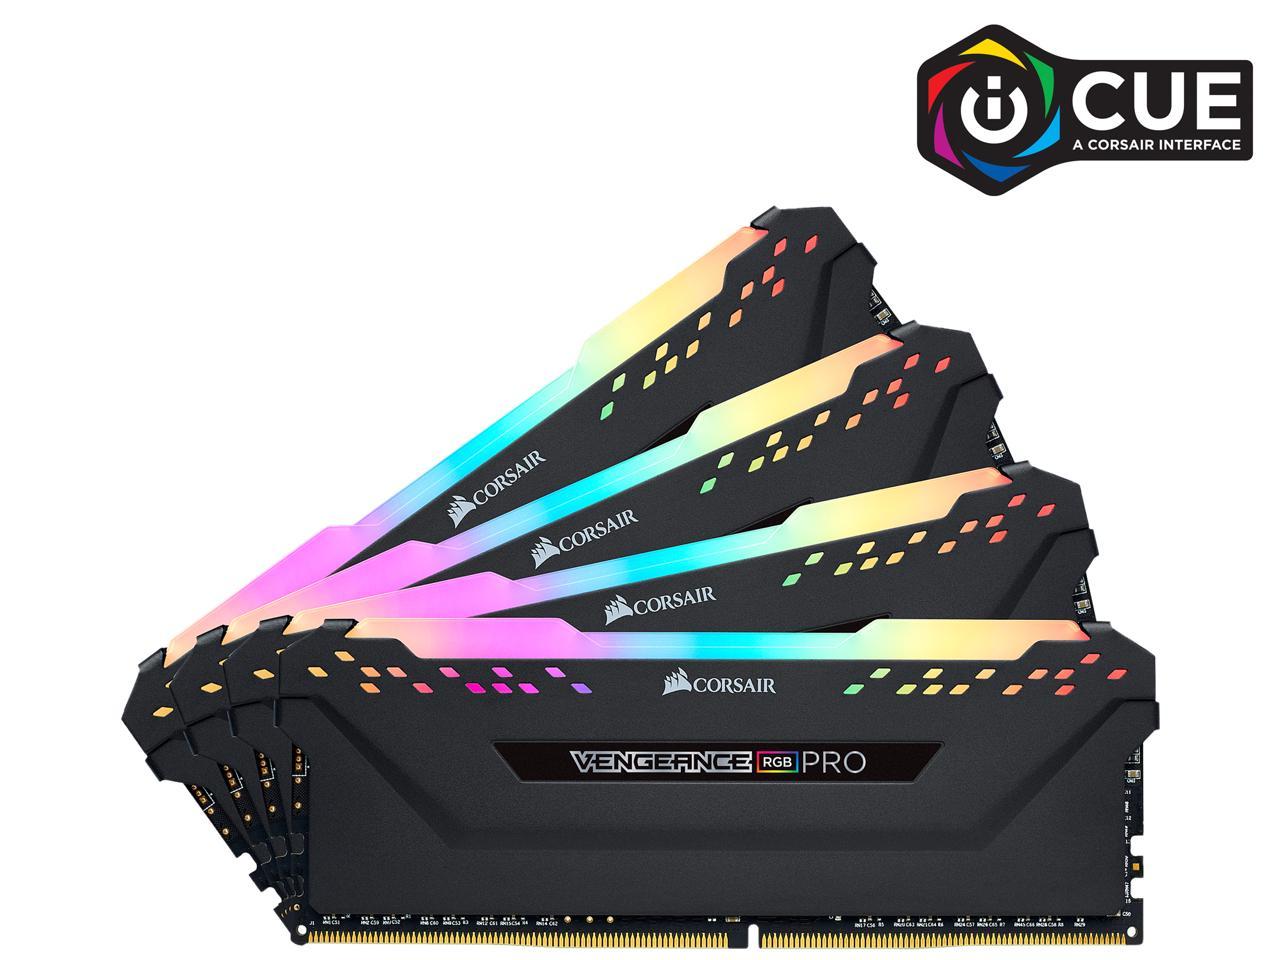 CORSAIR Vengeance RGB Pro 32GB 288-Pin DDR4 3200 Desktop Memory